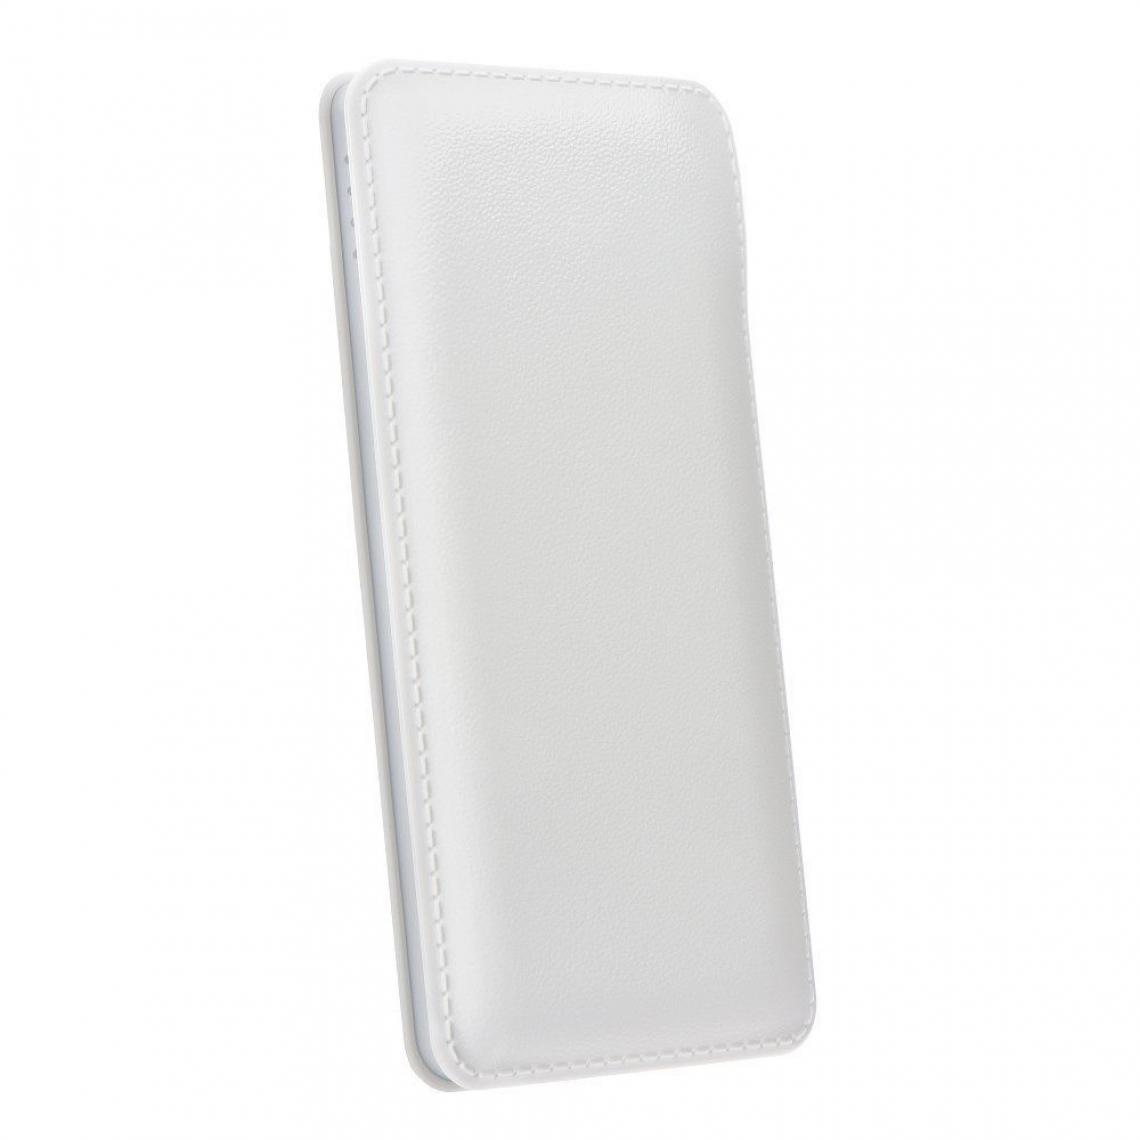 Ozzzo - Chargeur batterie externe 20000 mAh powerbank ozzzo blanc pour SAMSUNG N920 Galaxy Note 7 N930fd - Autres accessoires smartphone